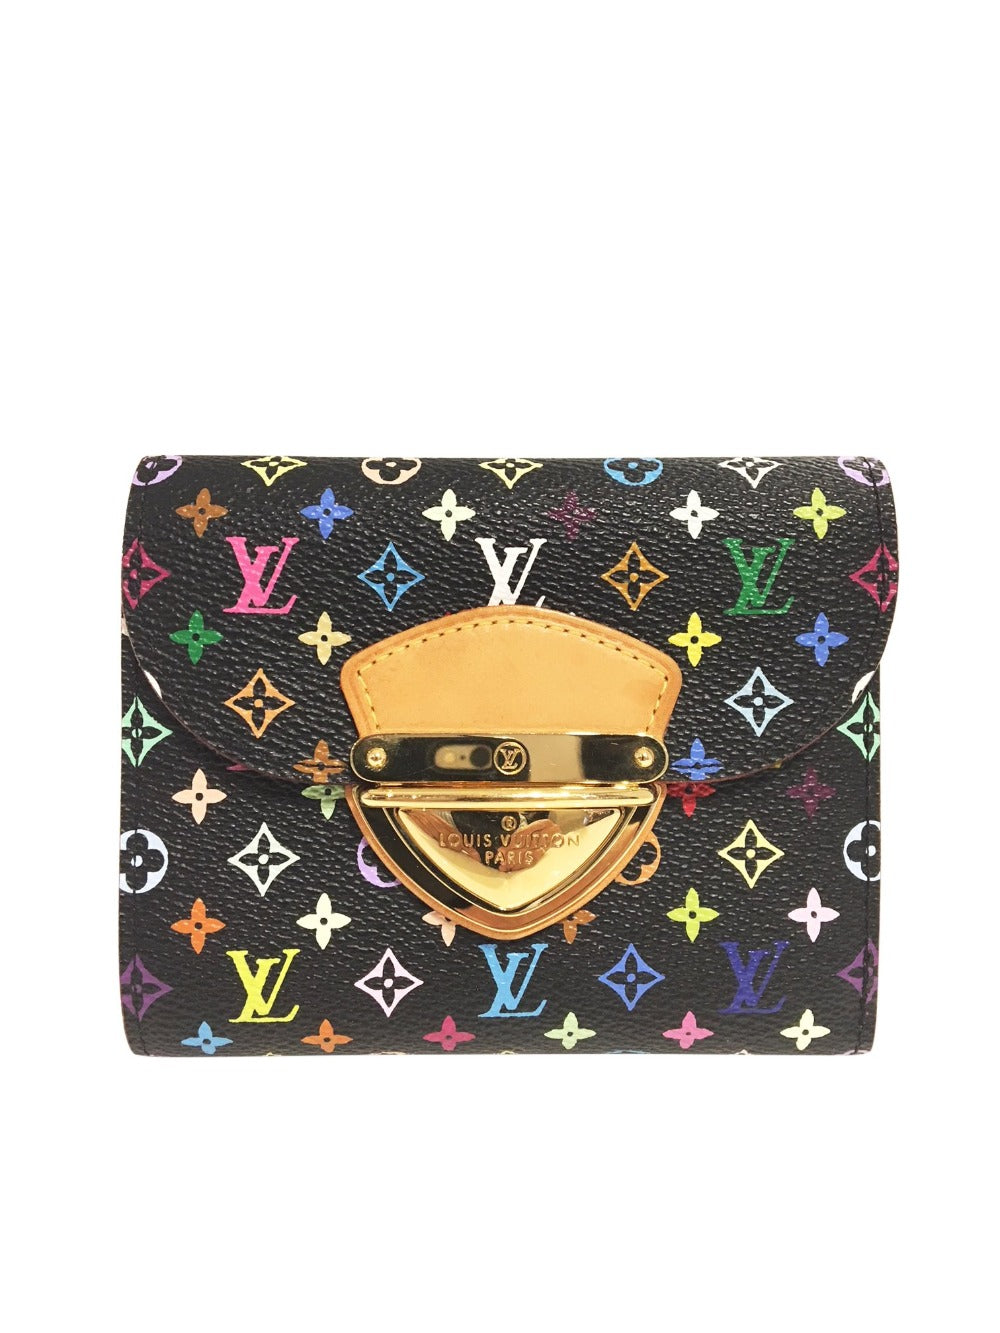 Louis Vuitton, Bags, Louis Vuitton Takashi Murakami Wallet